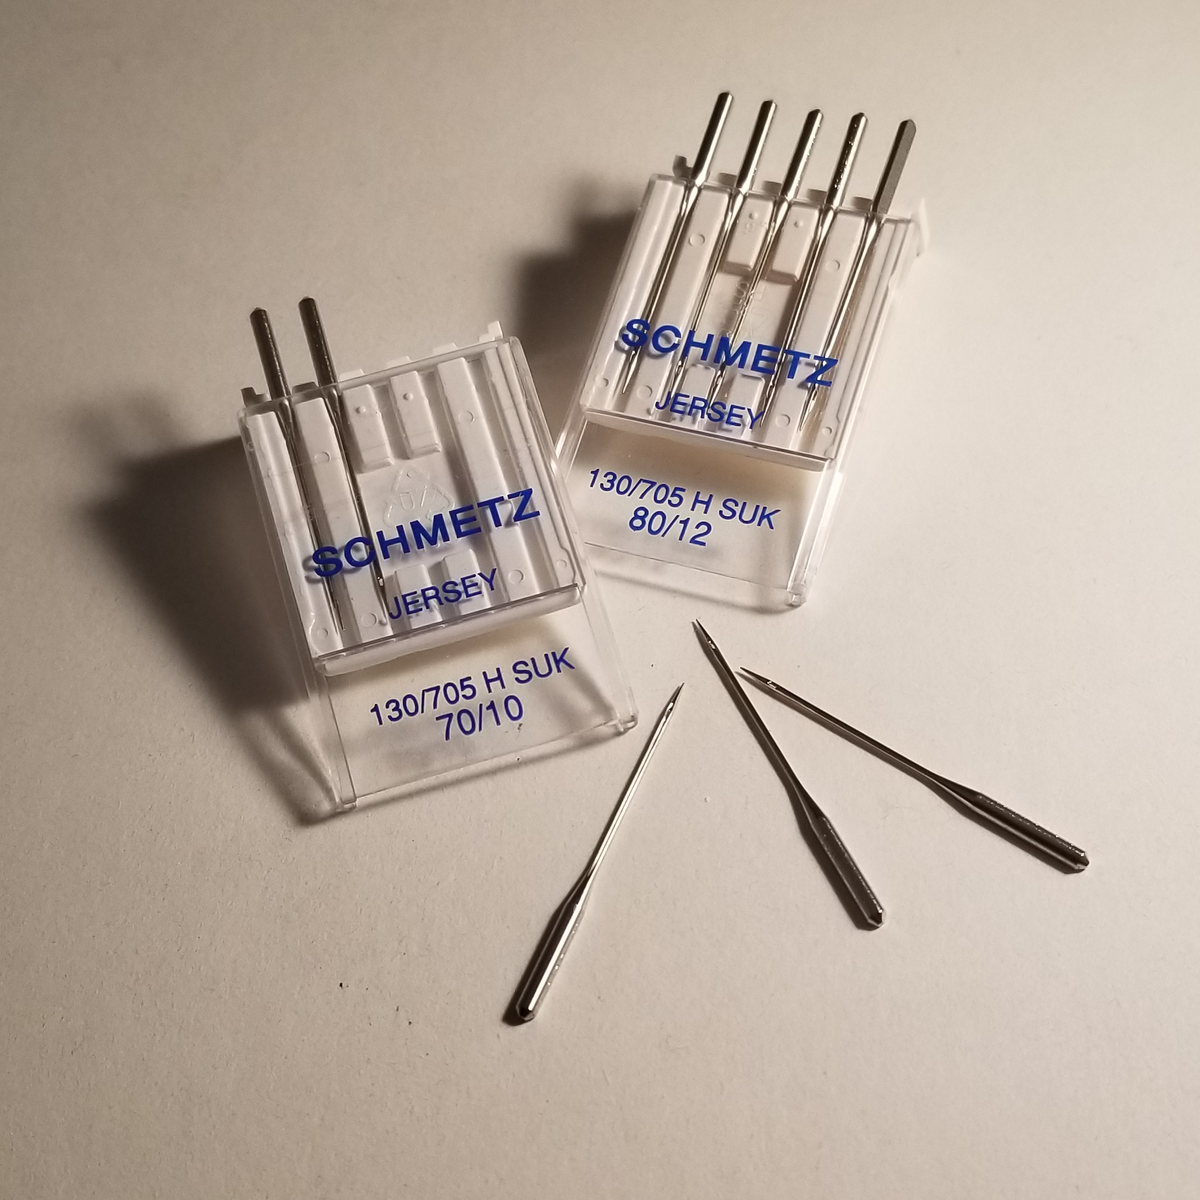 ORGAN JERSEY Machine Needles Assorted Sizes - 5 pack – Three